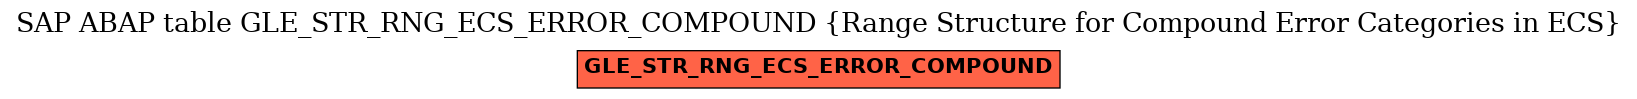 E-R Diagram for table GLE_STR_RNG_ECS_ERROR_COMPOUND (Range Structure for Compound Error Categories in ECS)